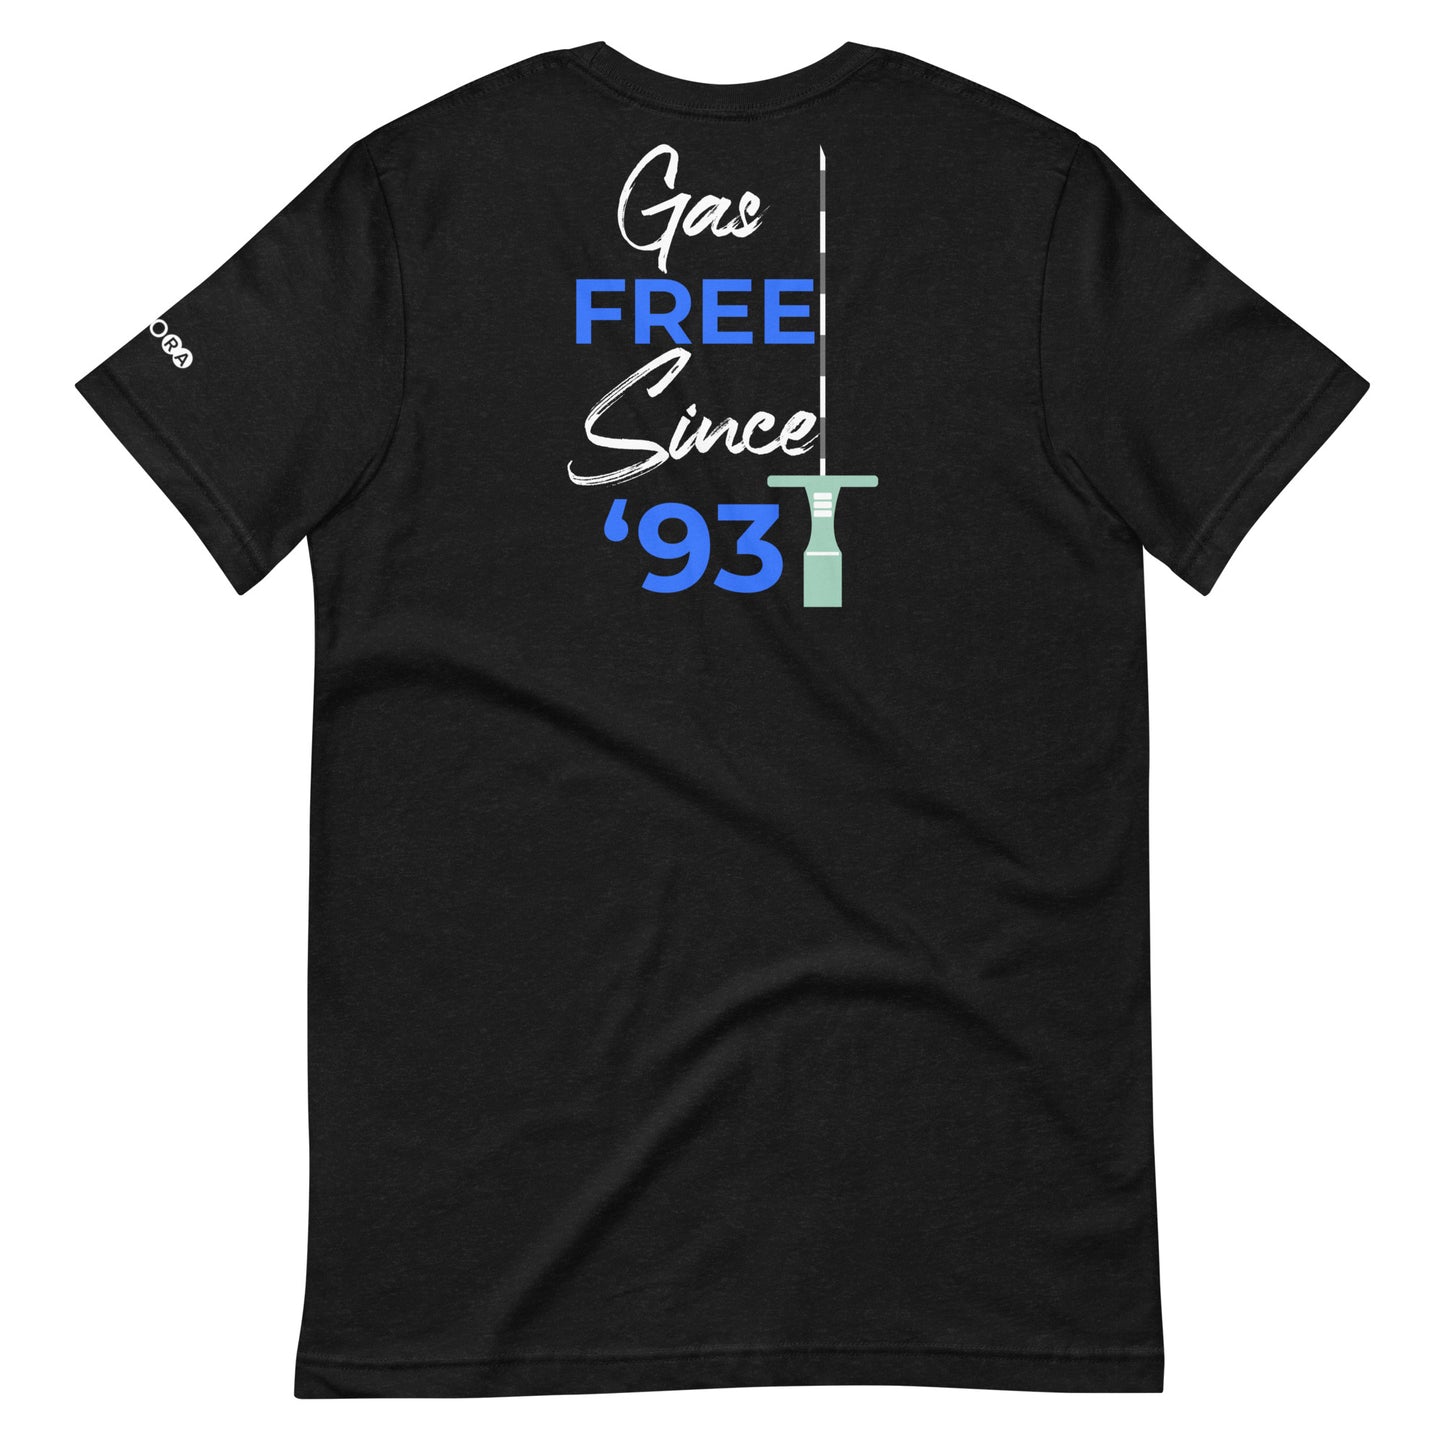 Gas Free Since '93 T-shirt